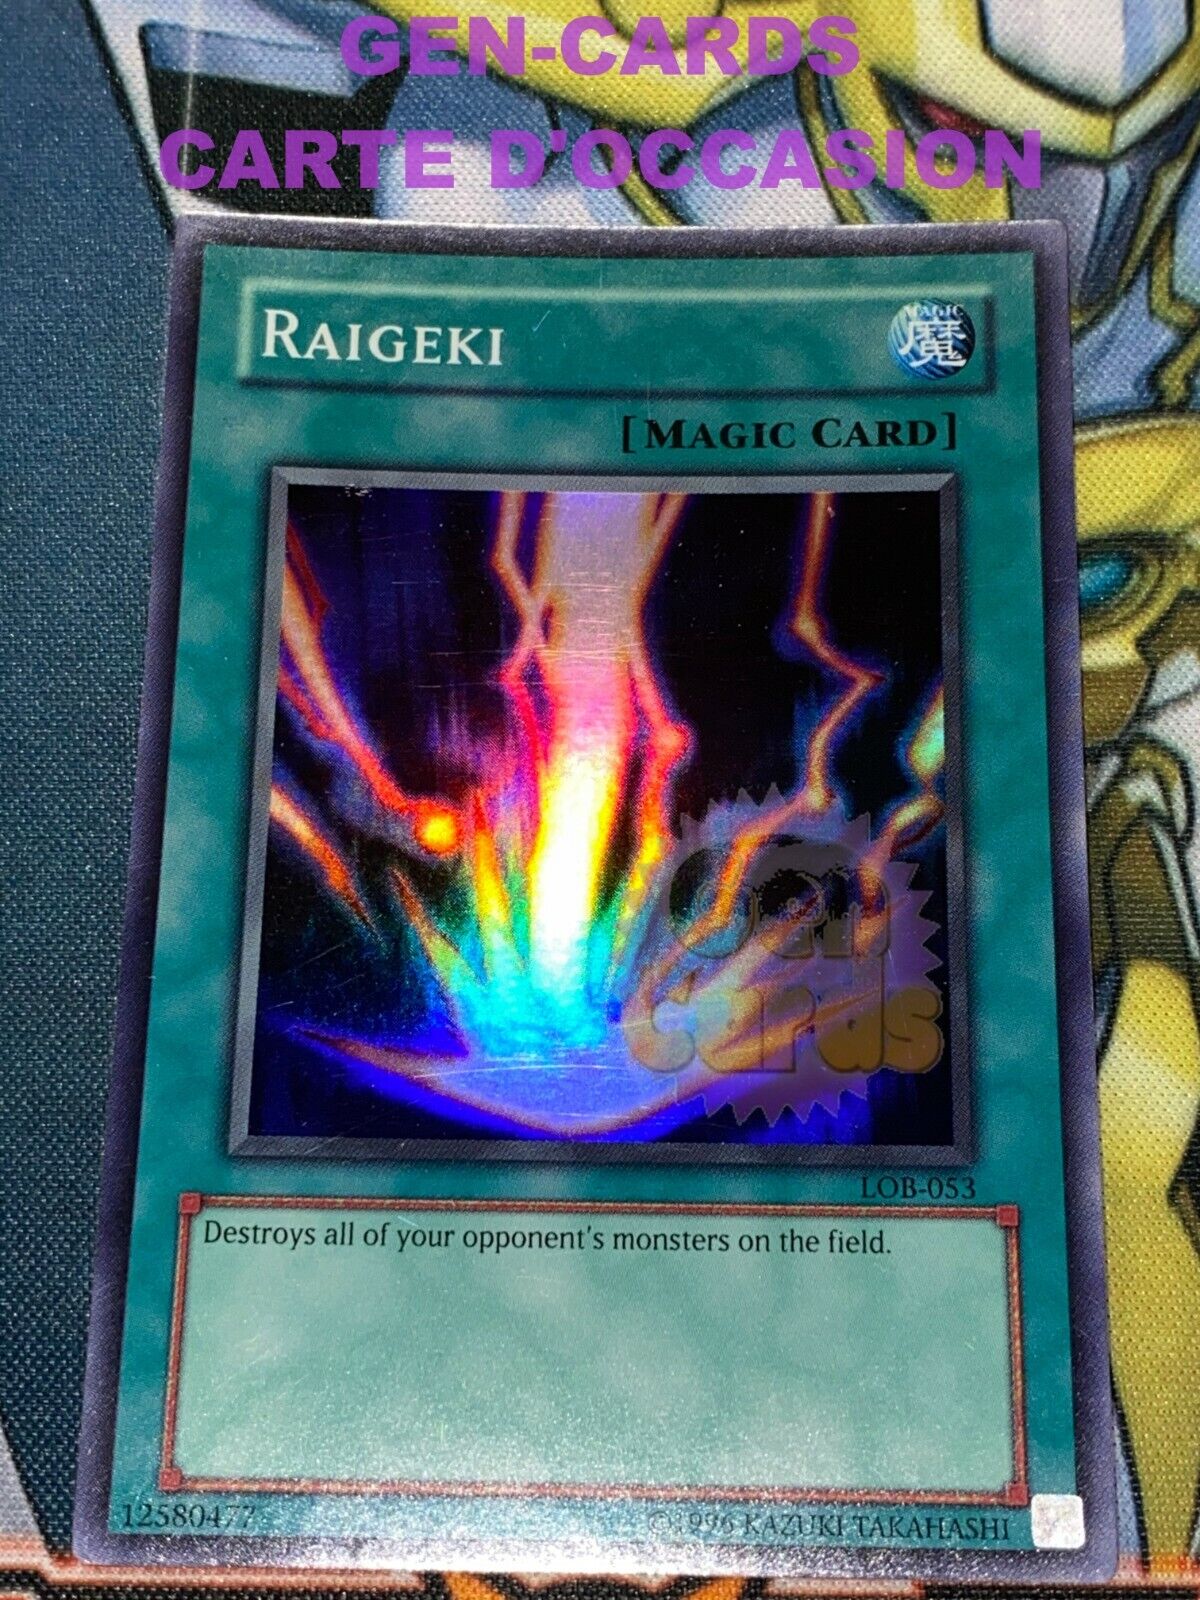 USED Yu Gi Oh RAIGEKI LOB-053 Card